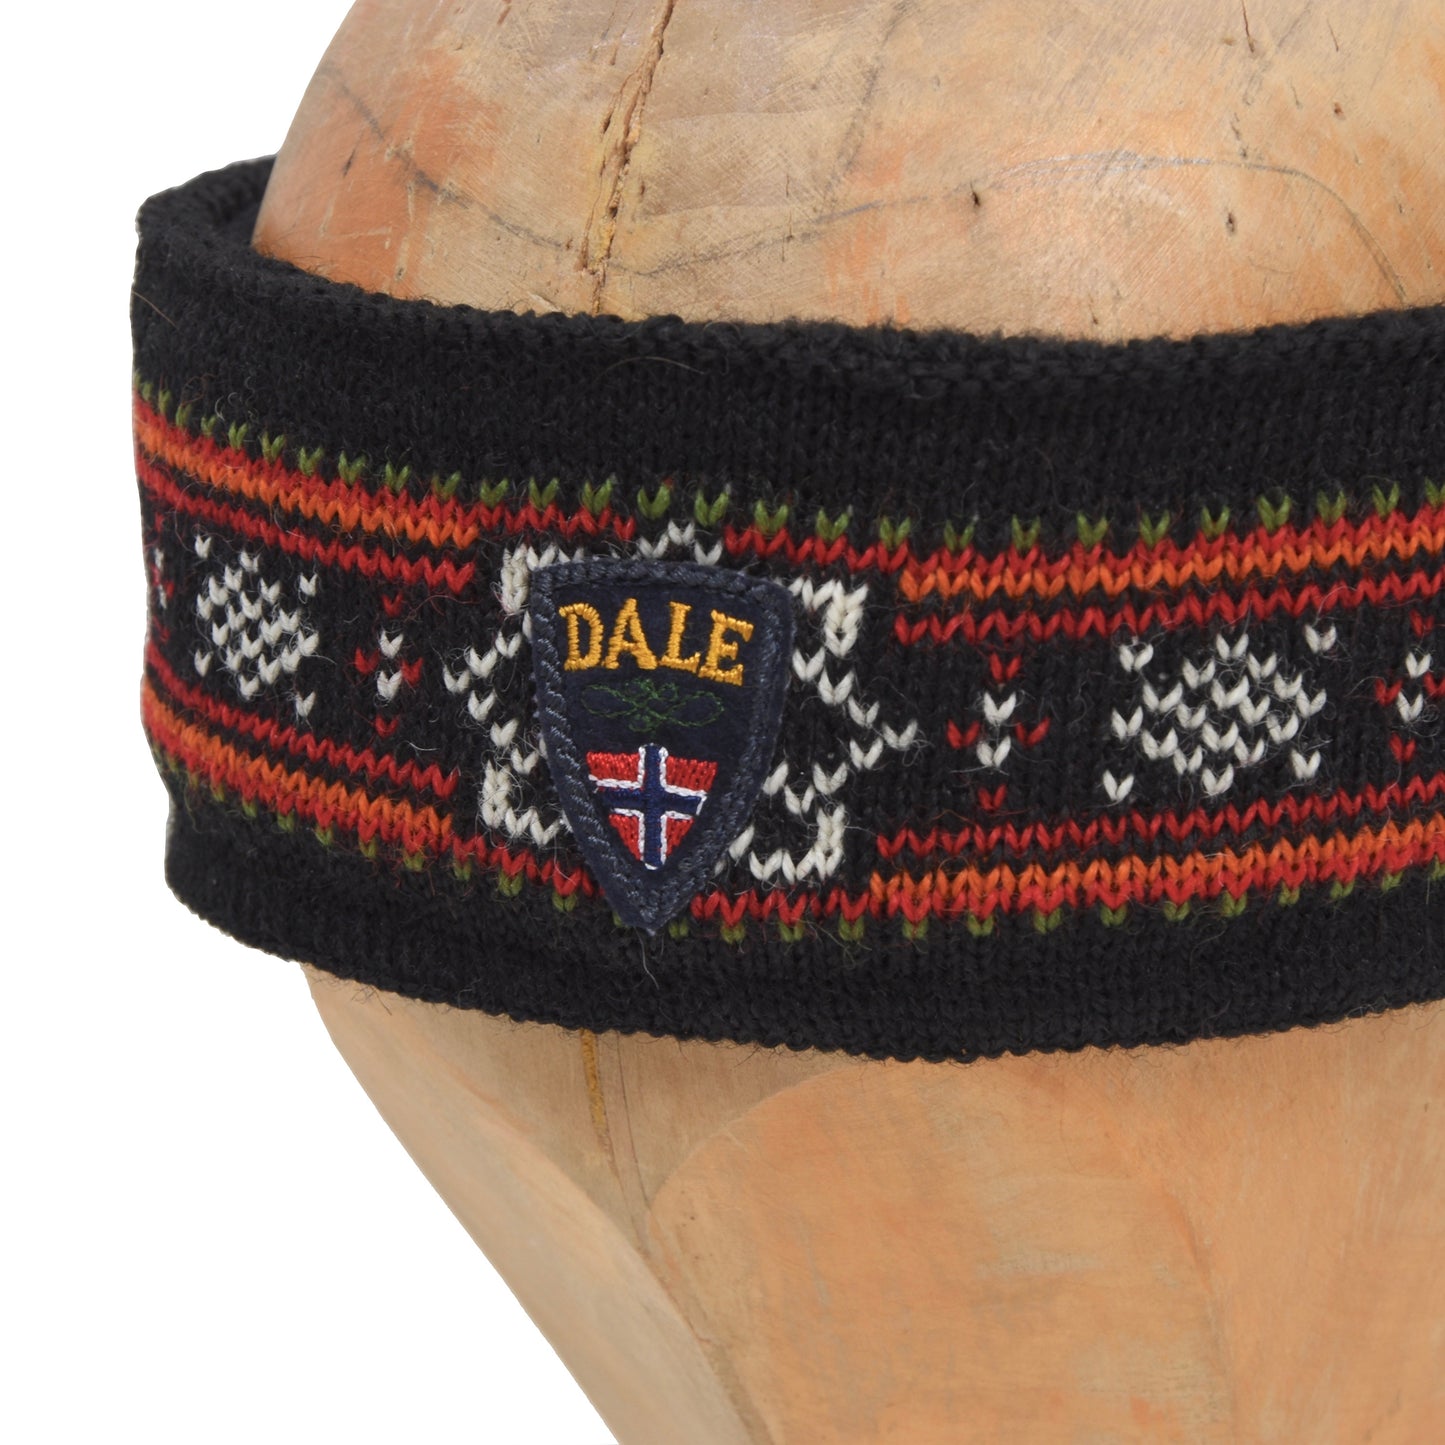 NWT Dale of Norway Wool Headband/Hat